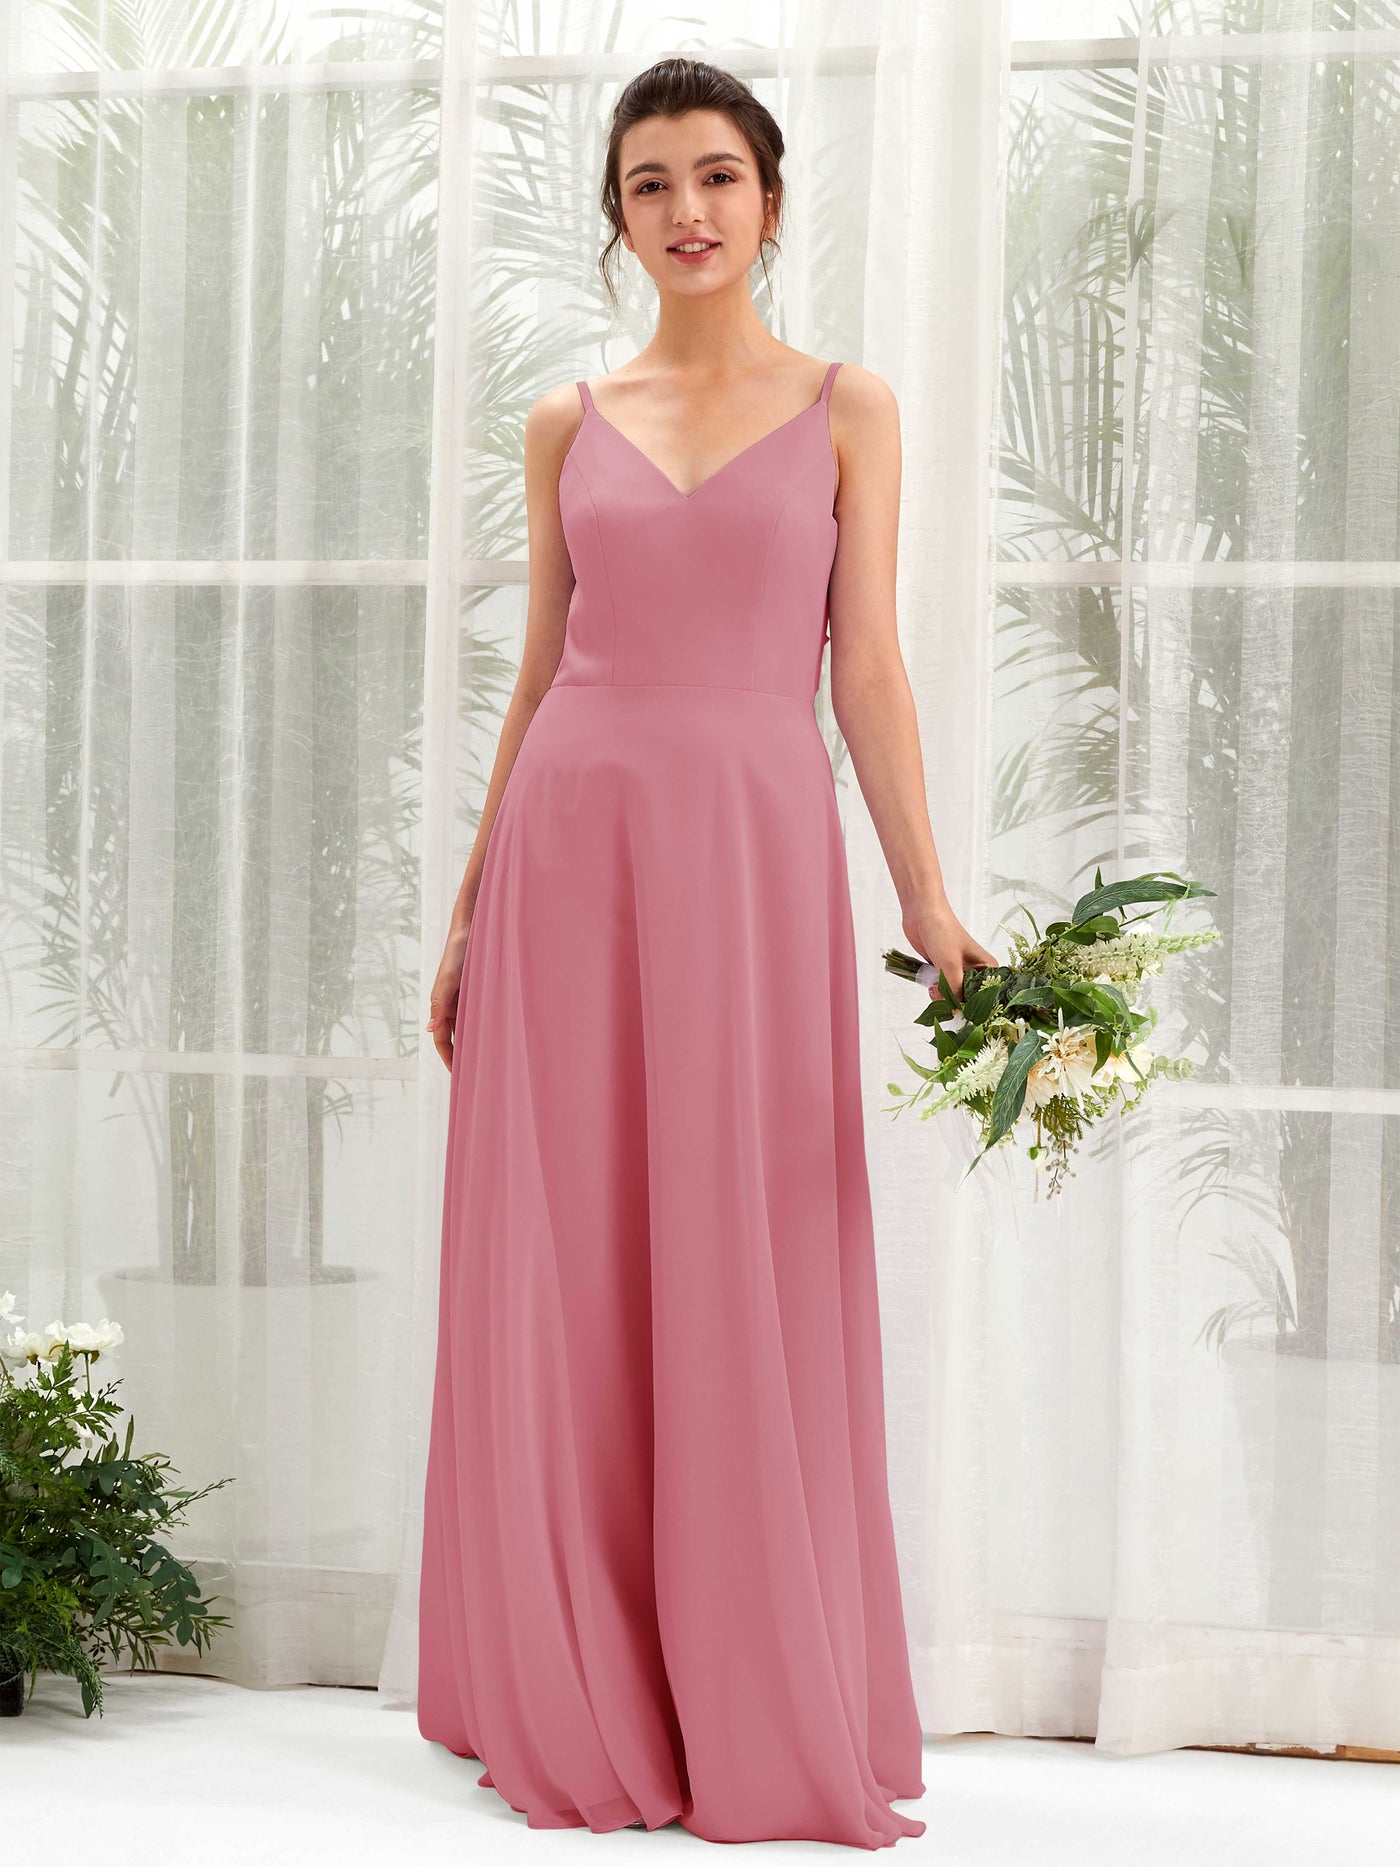 Desert Rose Bridesmaid Dresses Bridesmaid Dress A-line Chiffon Spaghetti-straps Full Length Sleeveless Wedding Party Dress (81220611)#color_desert-rose